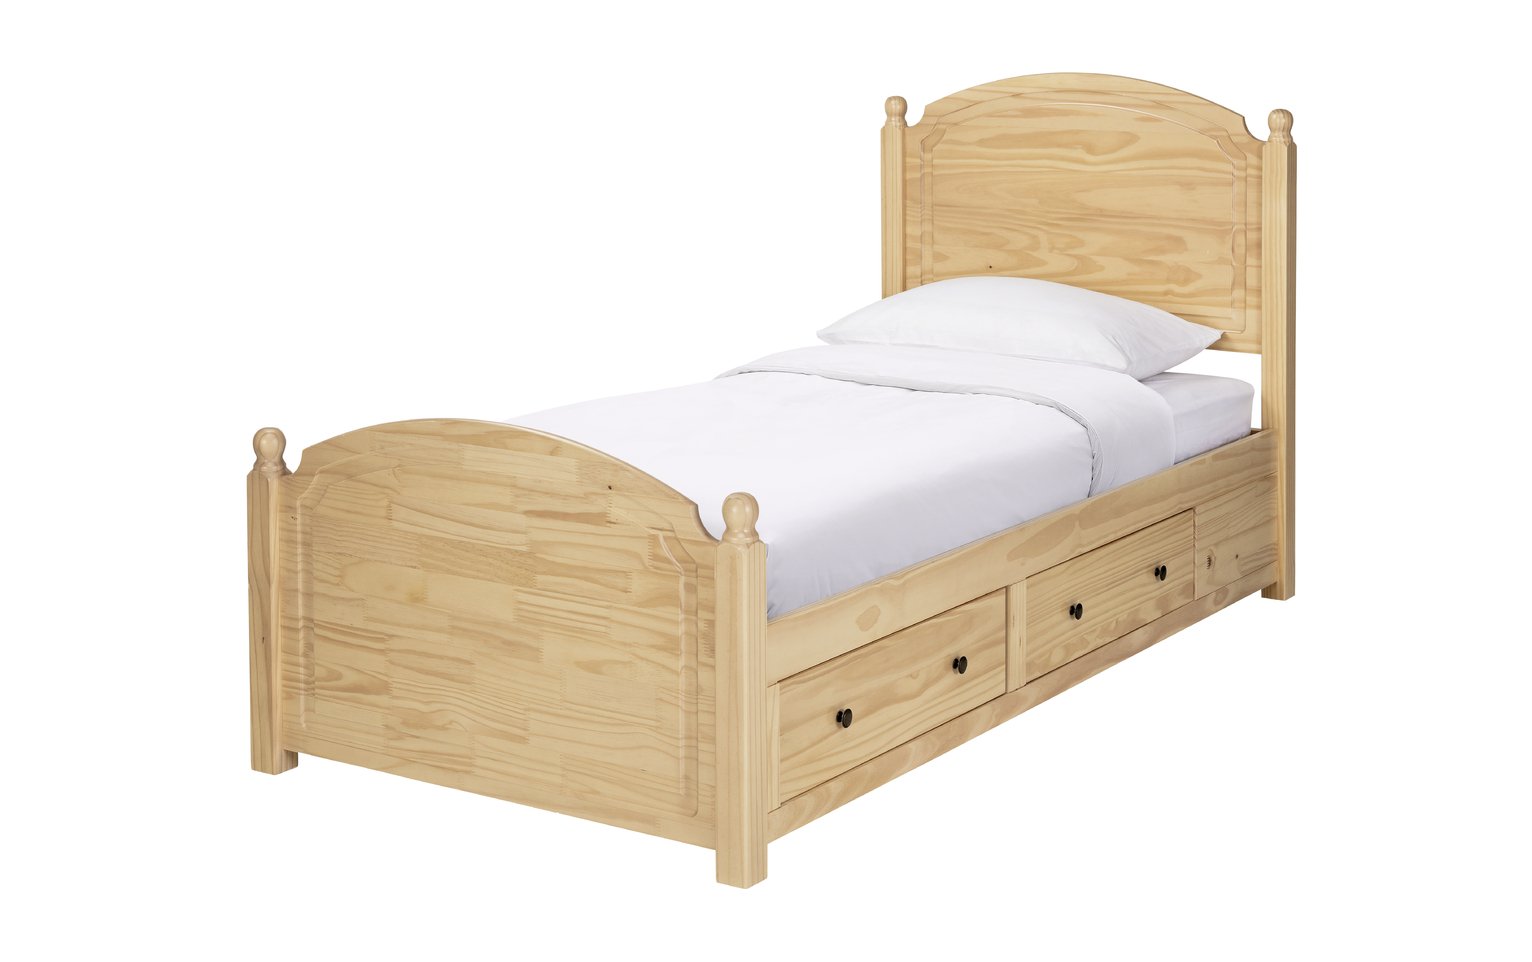 Argos Home Emberton Single Wooden Bed Frame - Pine